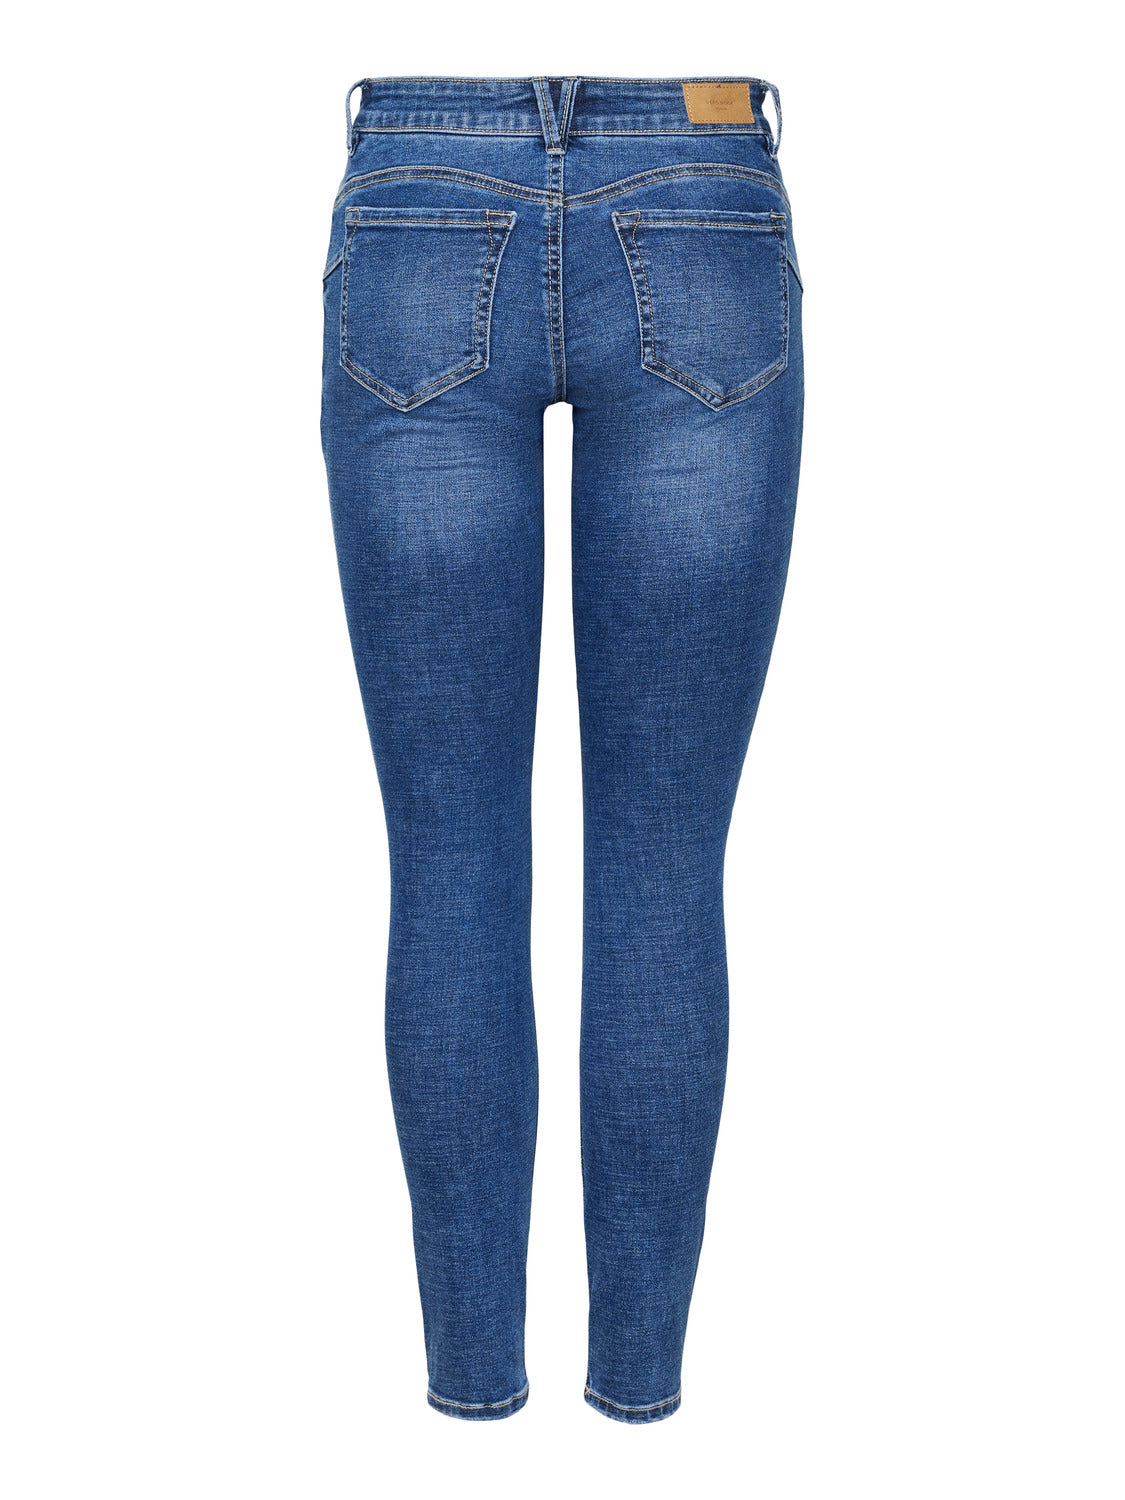 VMROBYN Jeans - Medium Blue Denim – Moda Aalborg - Bispensgade